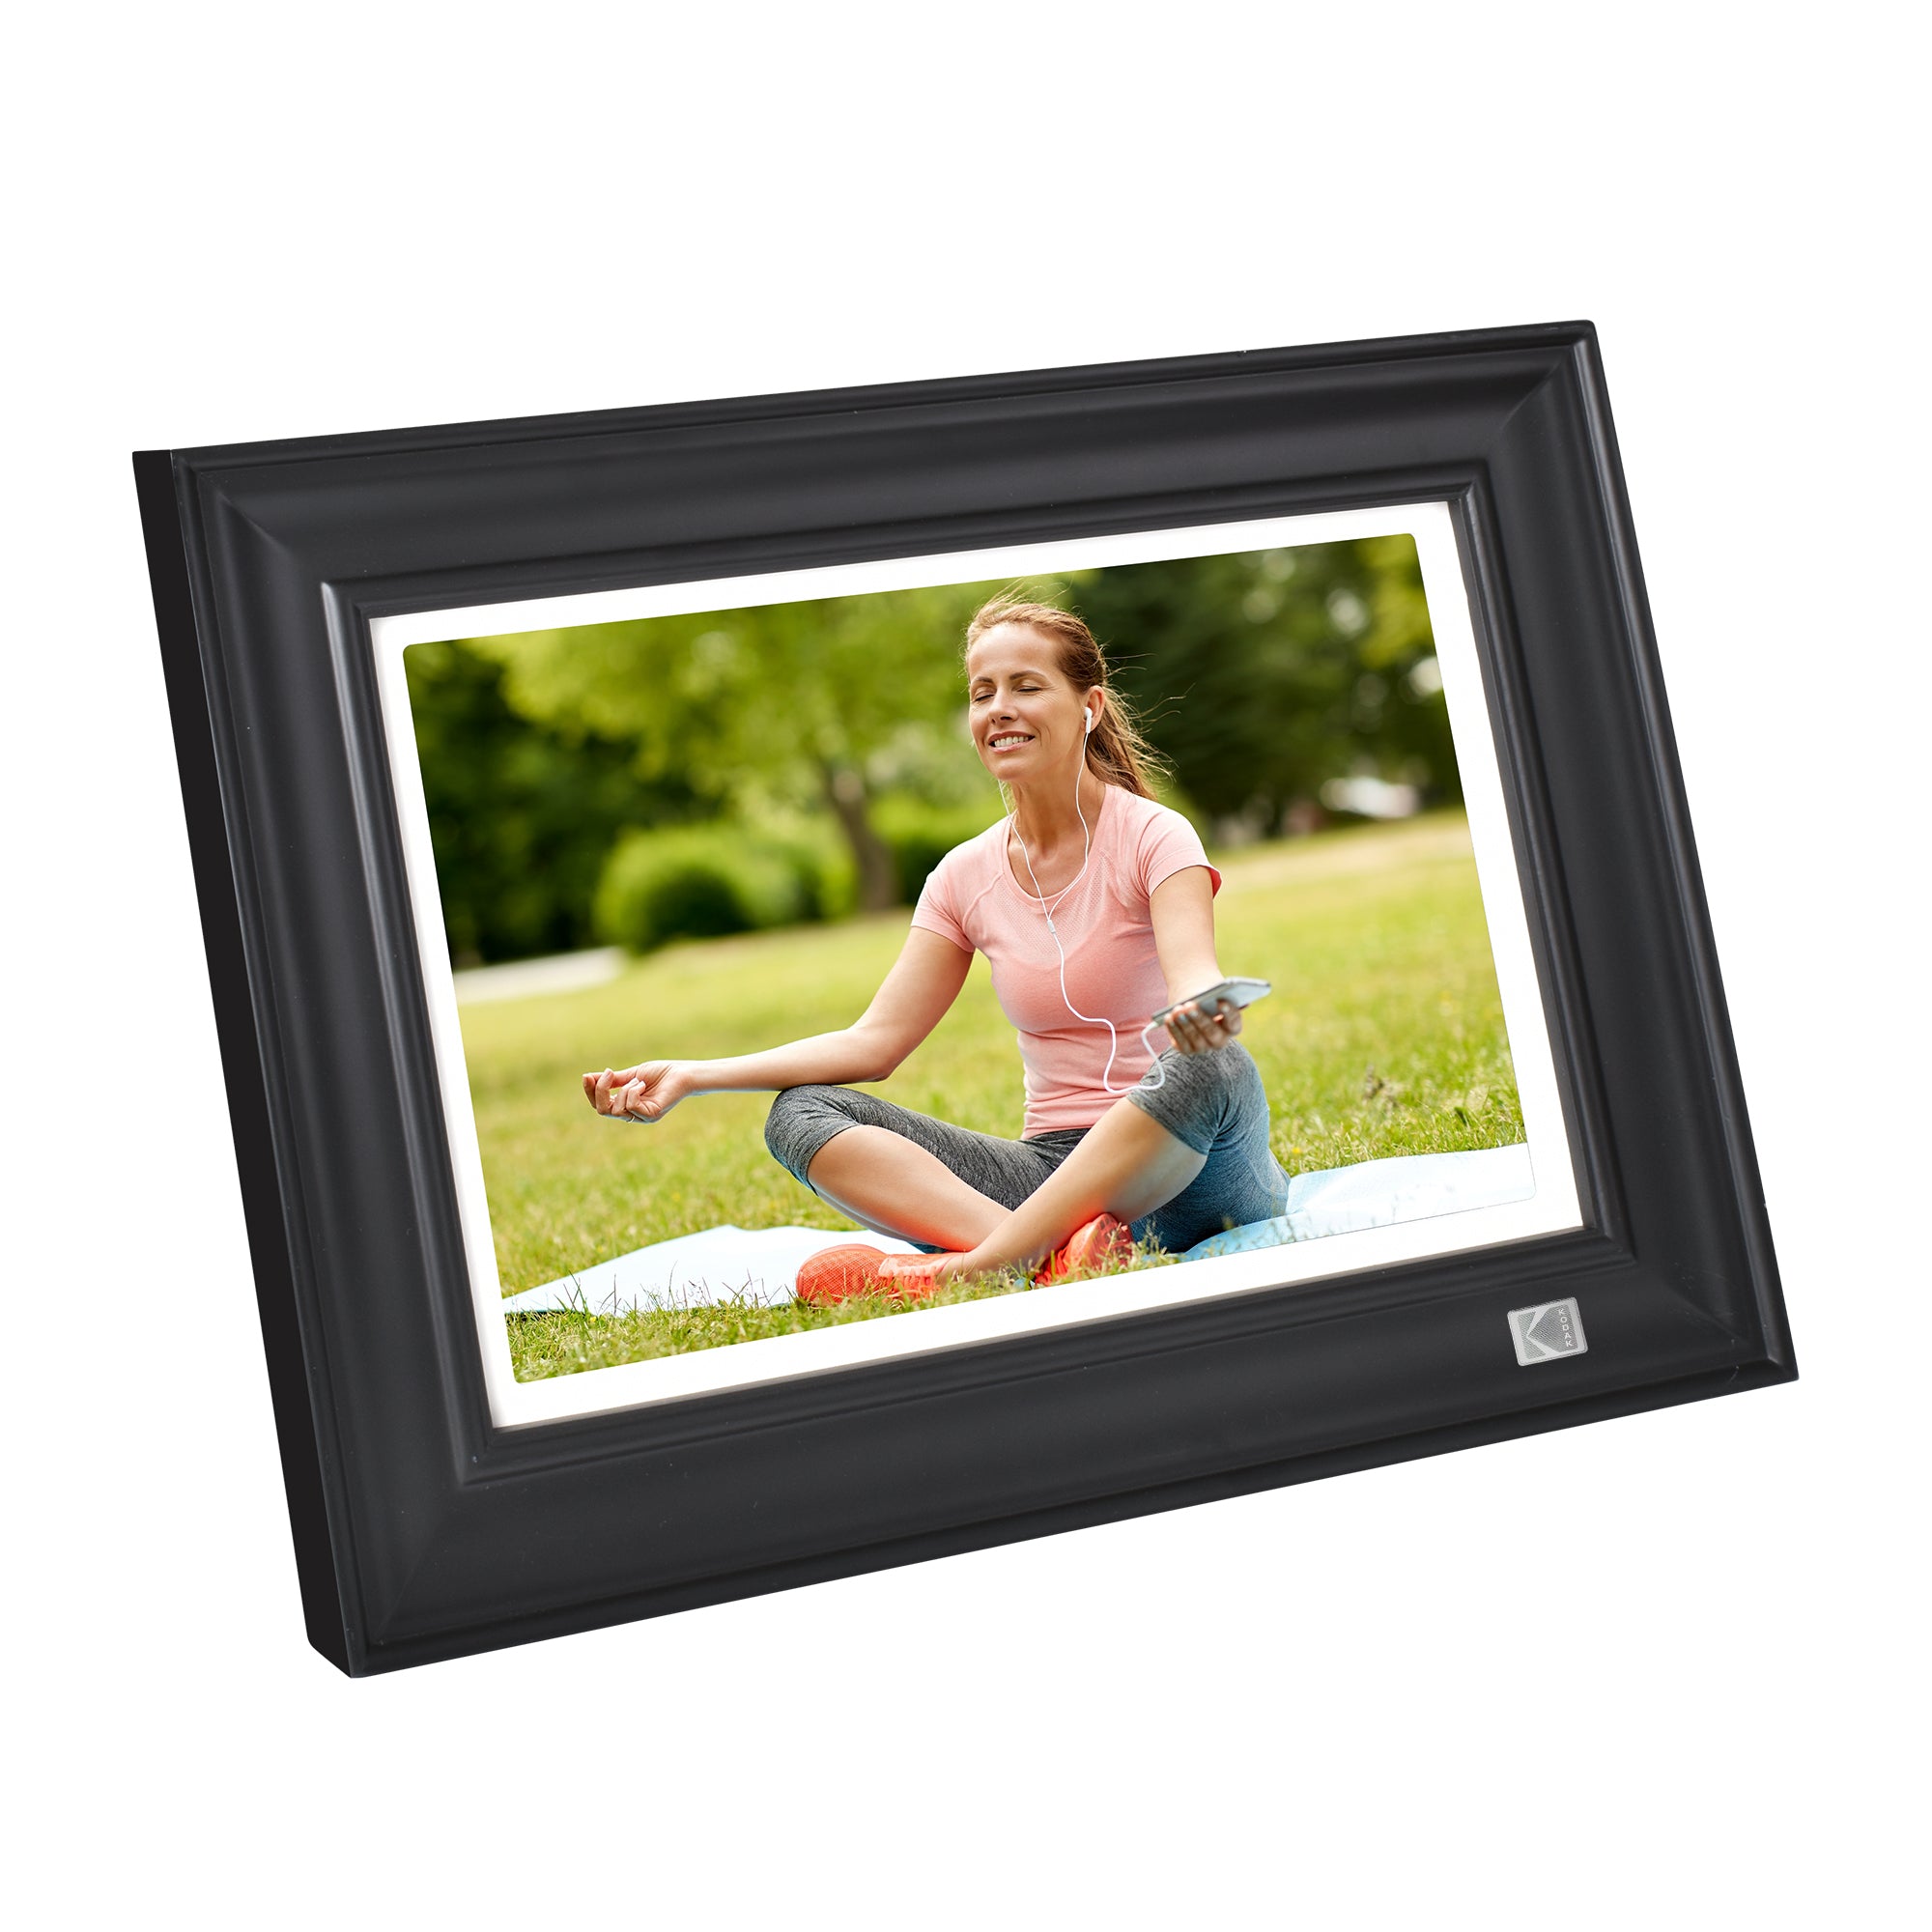 KODAK Digital Photo Frame RWF-127, Full HD 10.1 inch Touchscreen, WiFi Enabled, 32GB Internal Memory with Photo, Video, Audio, Calendar & Weather Display Features